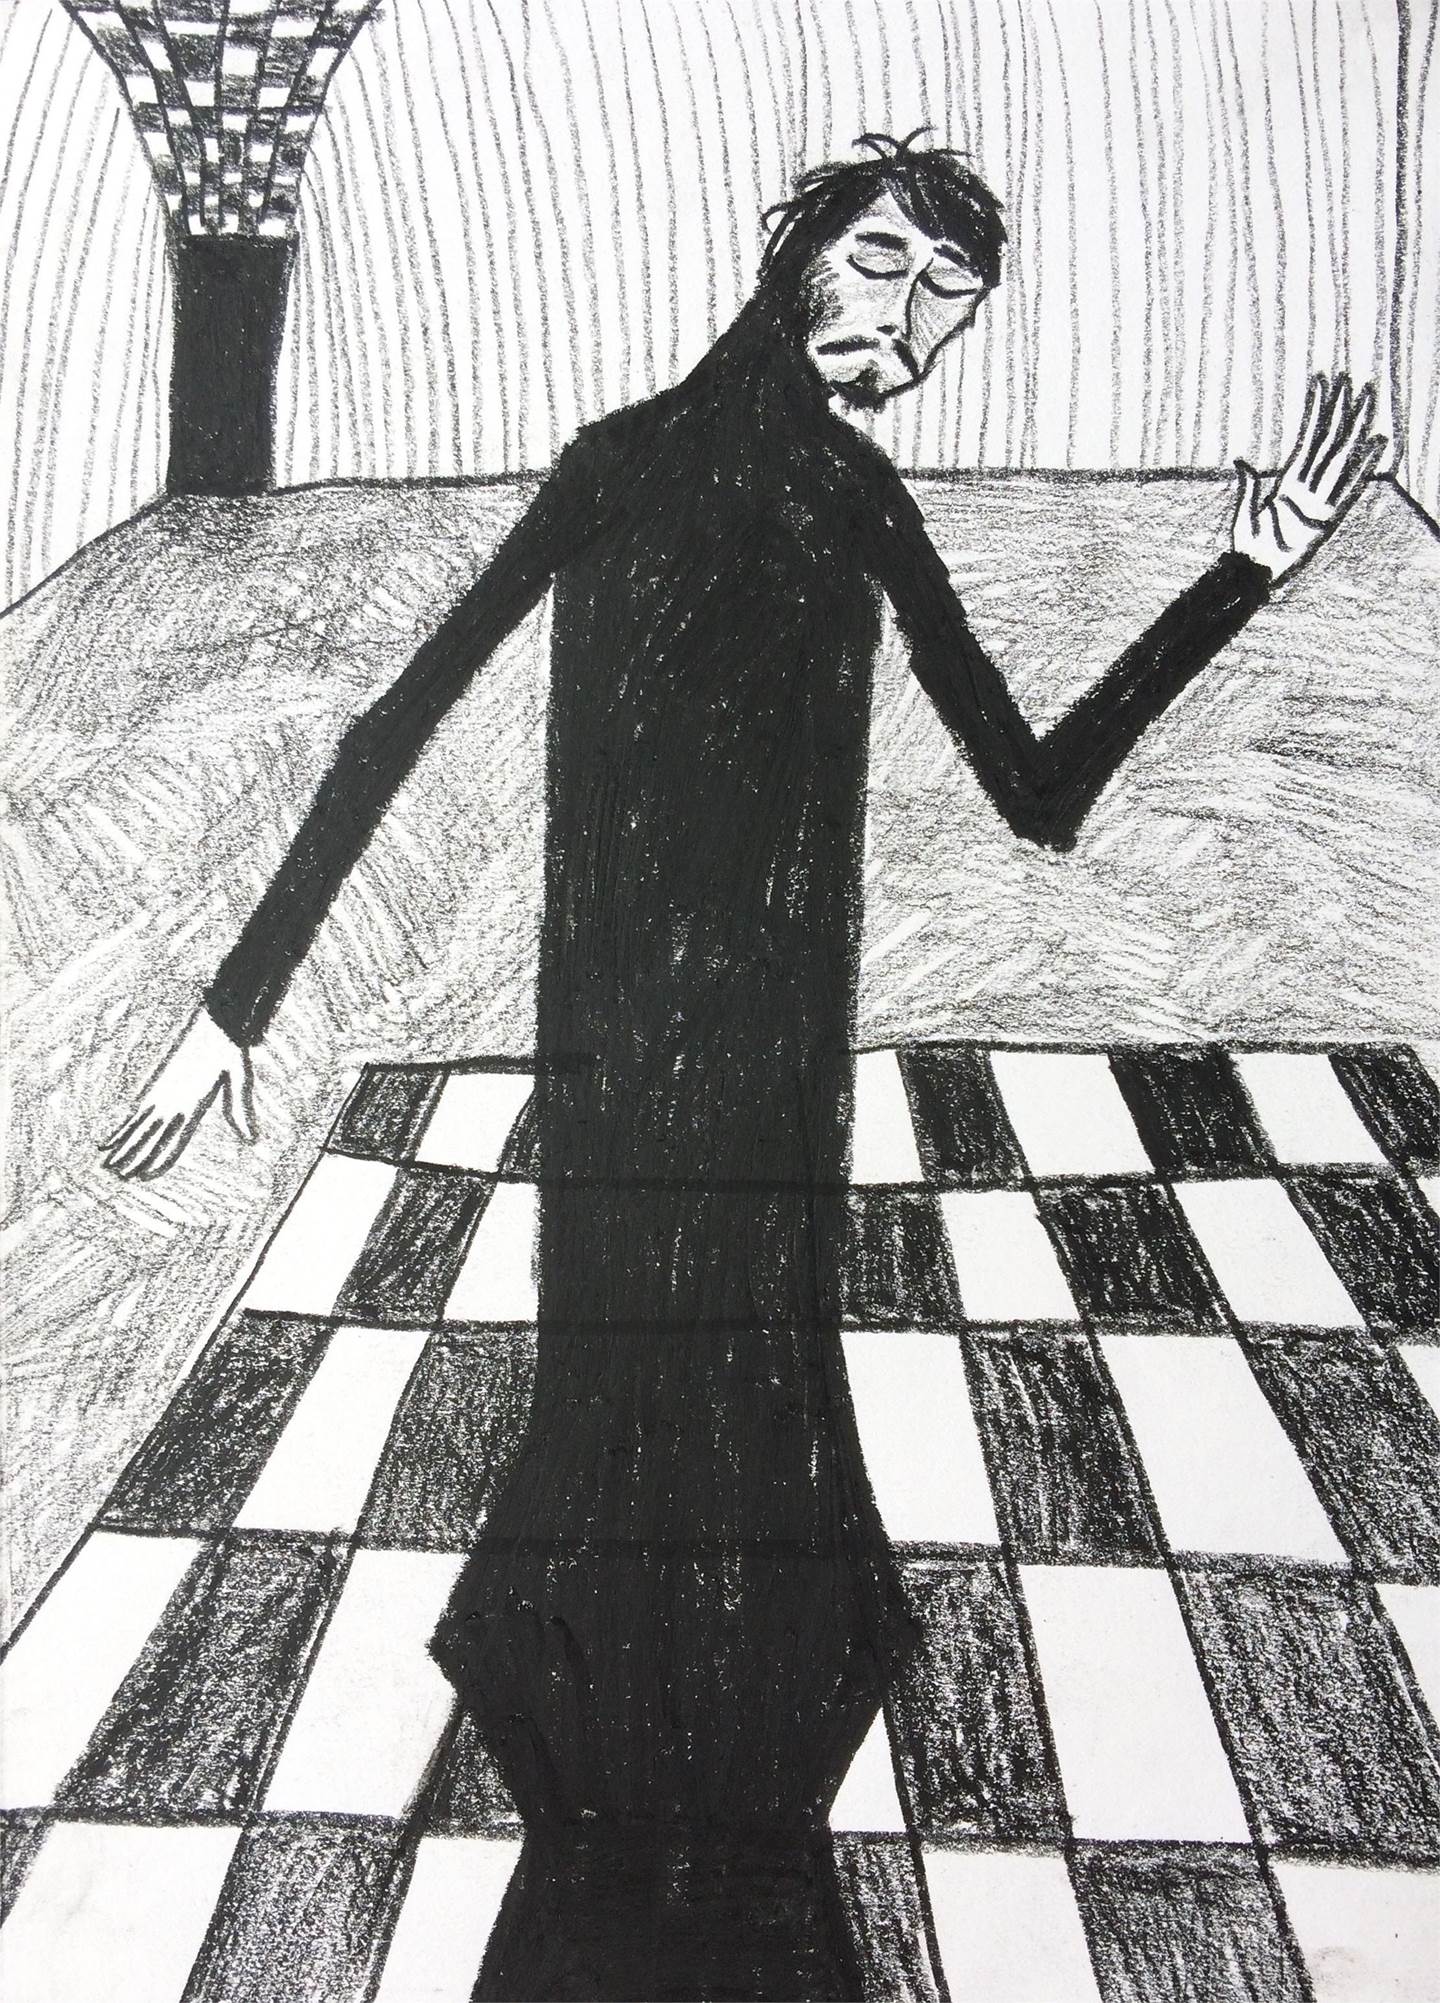 23. A peça de jogo, original Human Figure Charcoal Drawing and Illustration by Hugo Castilho